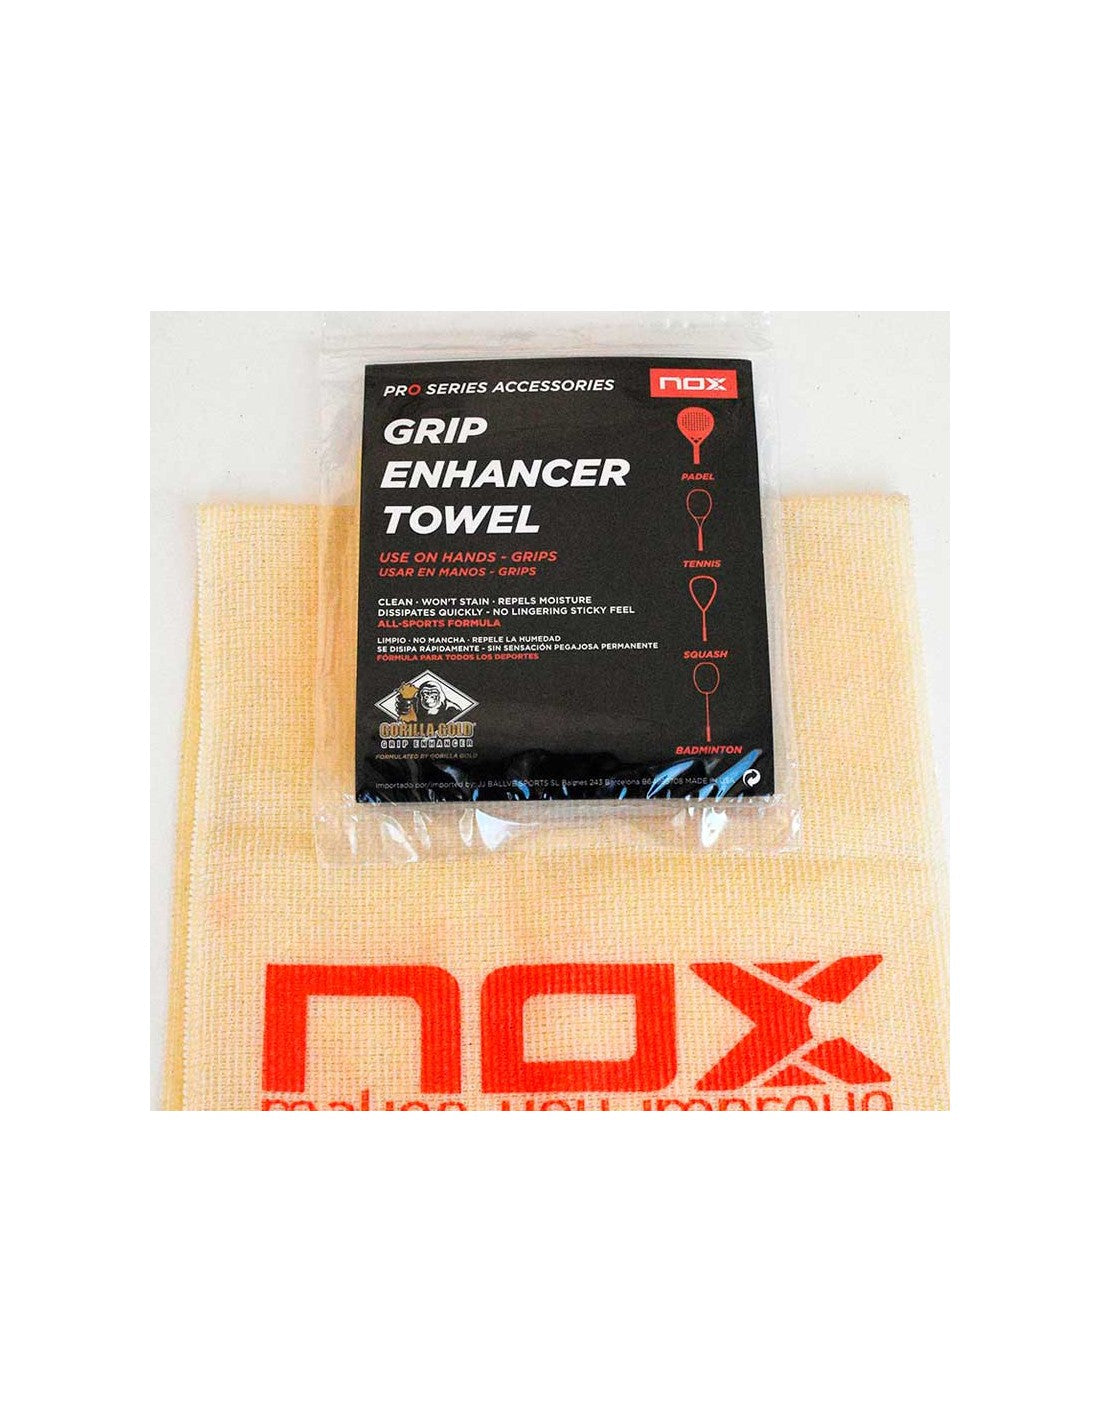 Nox Grip Enhancer Towel